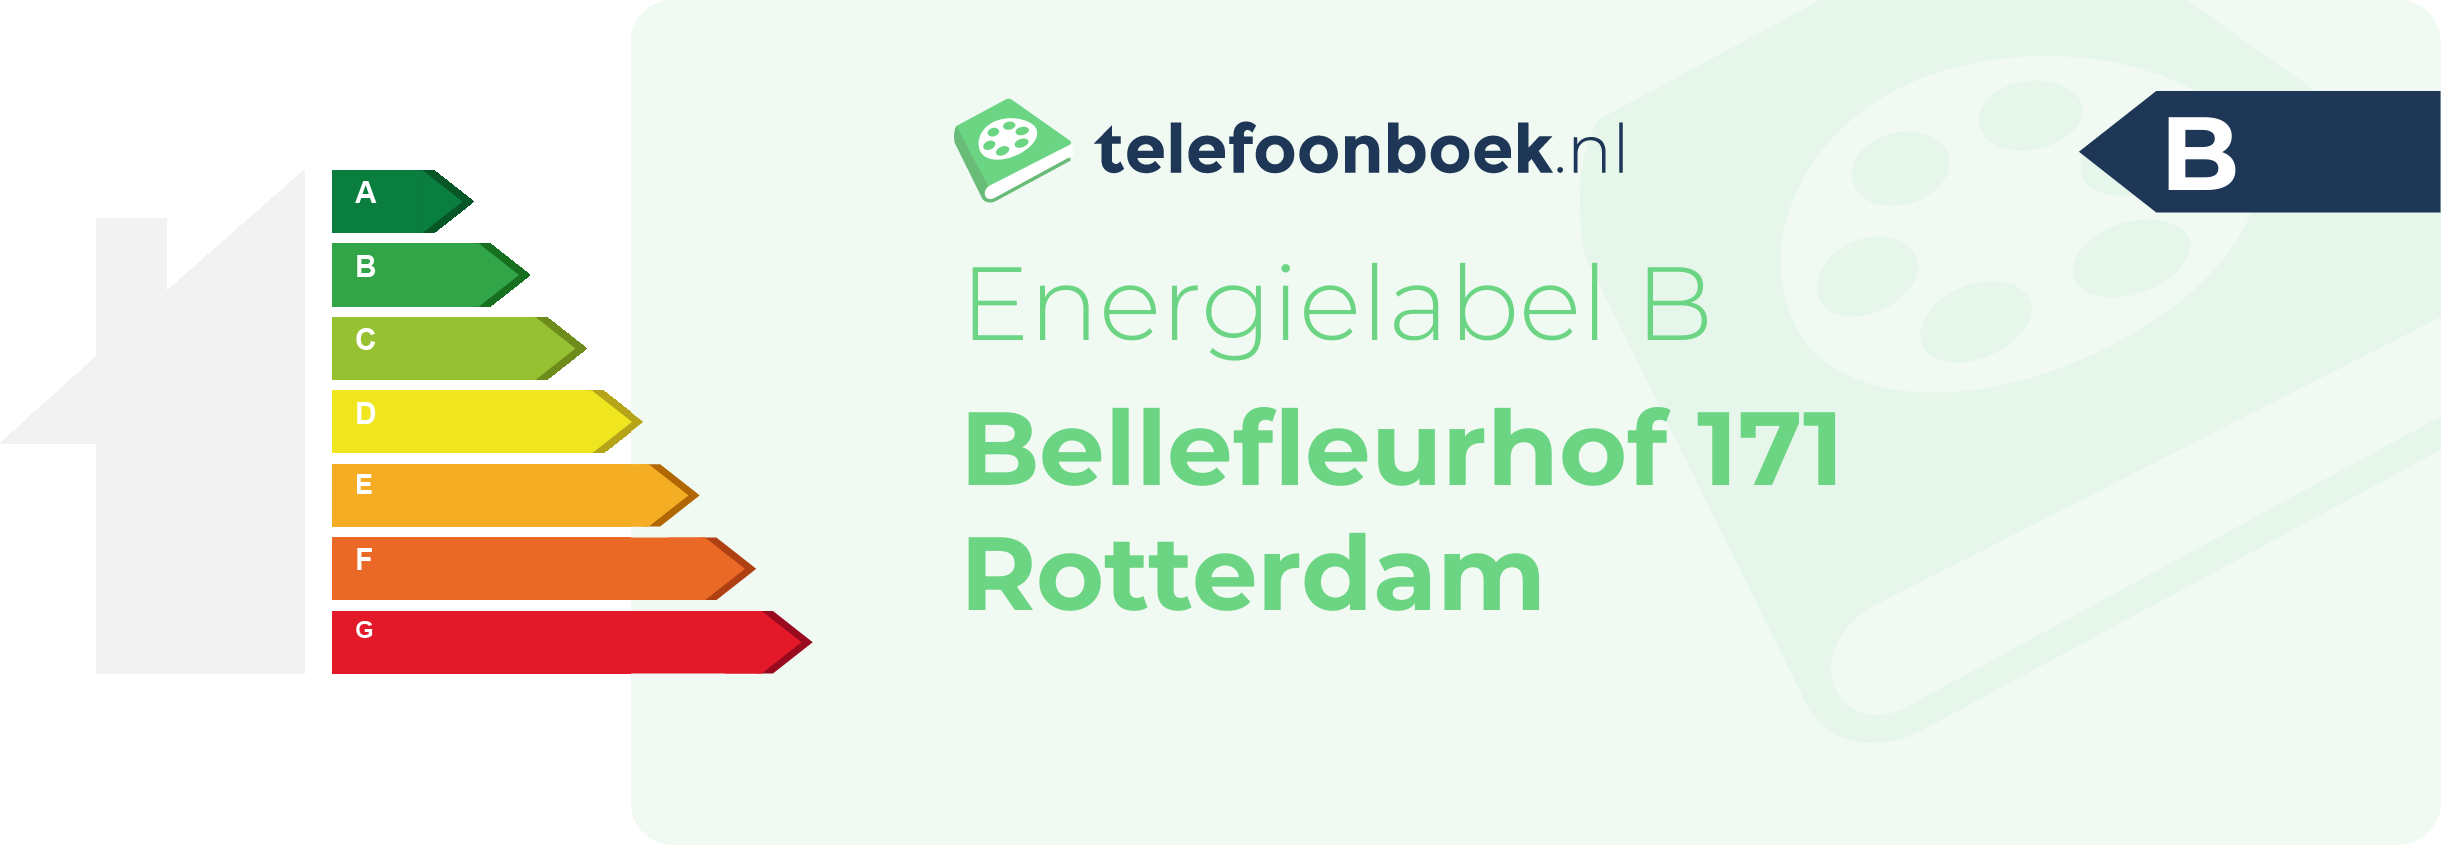 Energielabel Bellefleurhof 171 Rotterdam